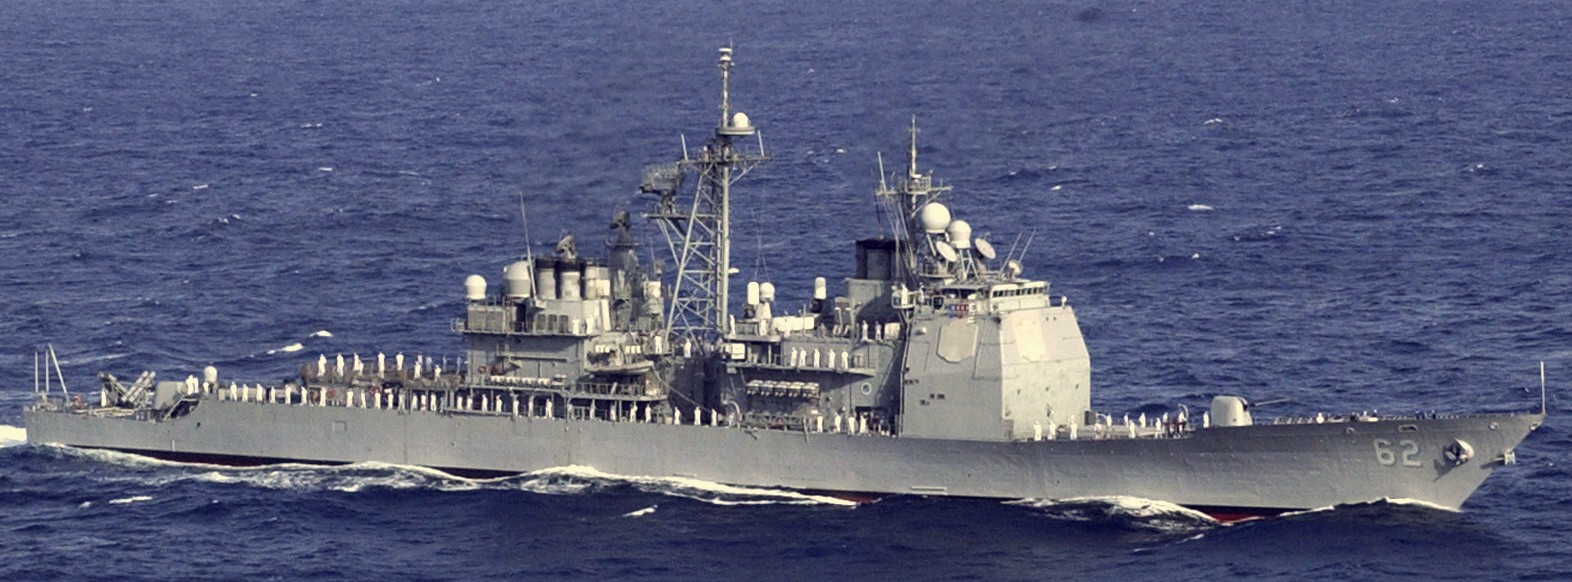 cg-62 uss chancellorsville ticonderoga class guided missile cruiser aegis us navy 03